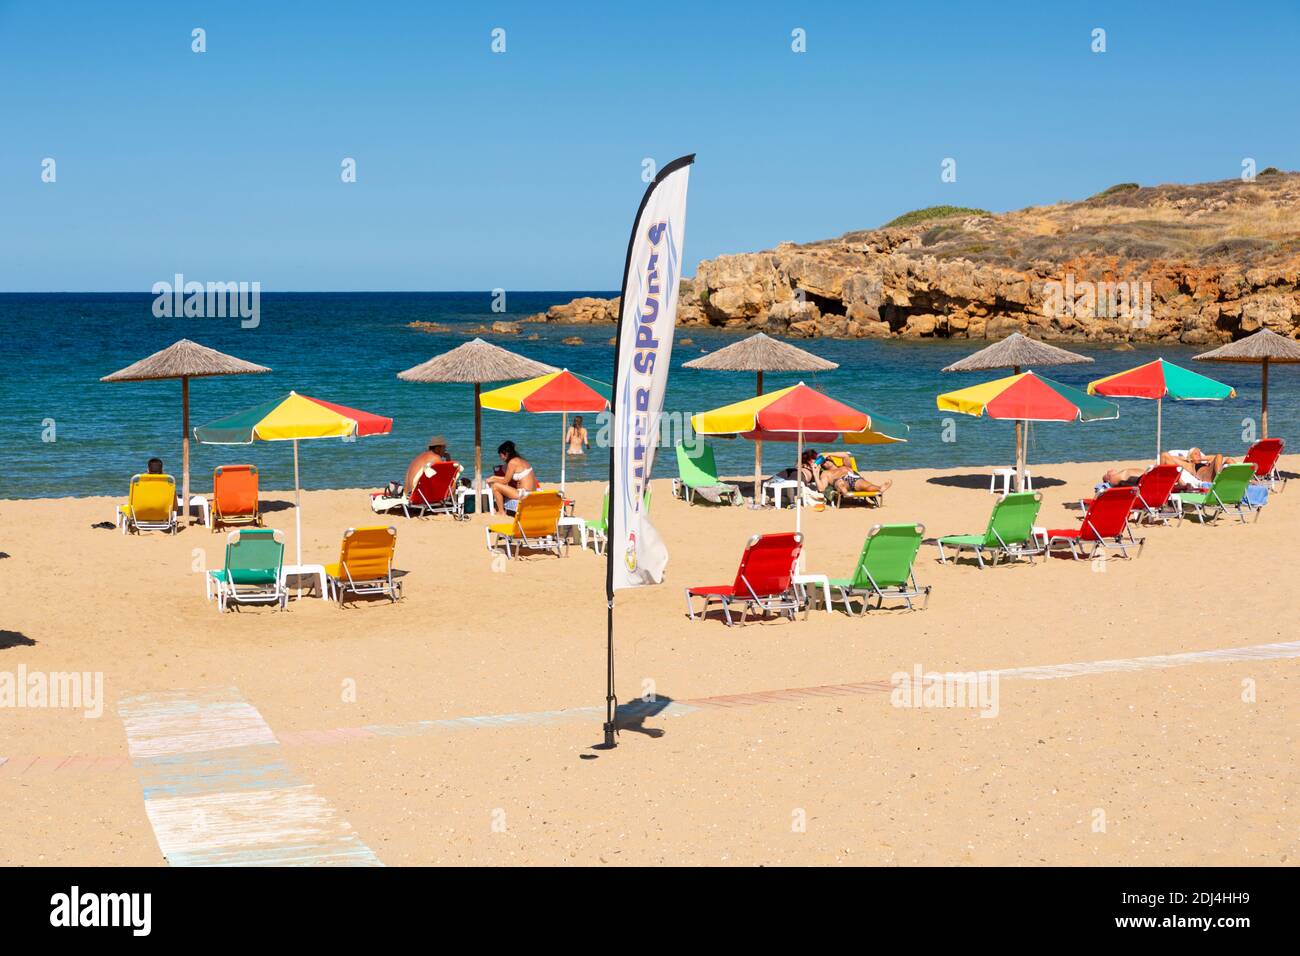 Sun loungers and umbrellas at Iguana Beach (Agii Apostoli Beach), Chania, Crete, Greece Stock Photo